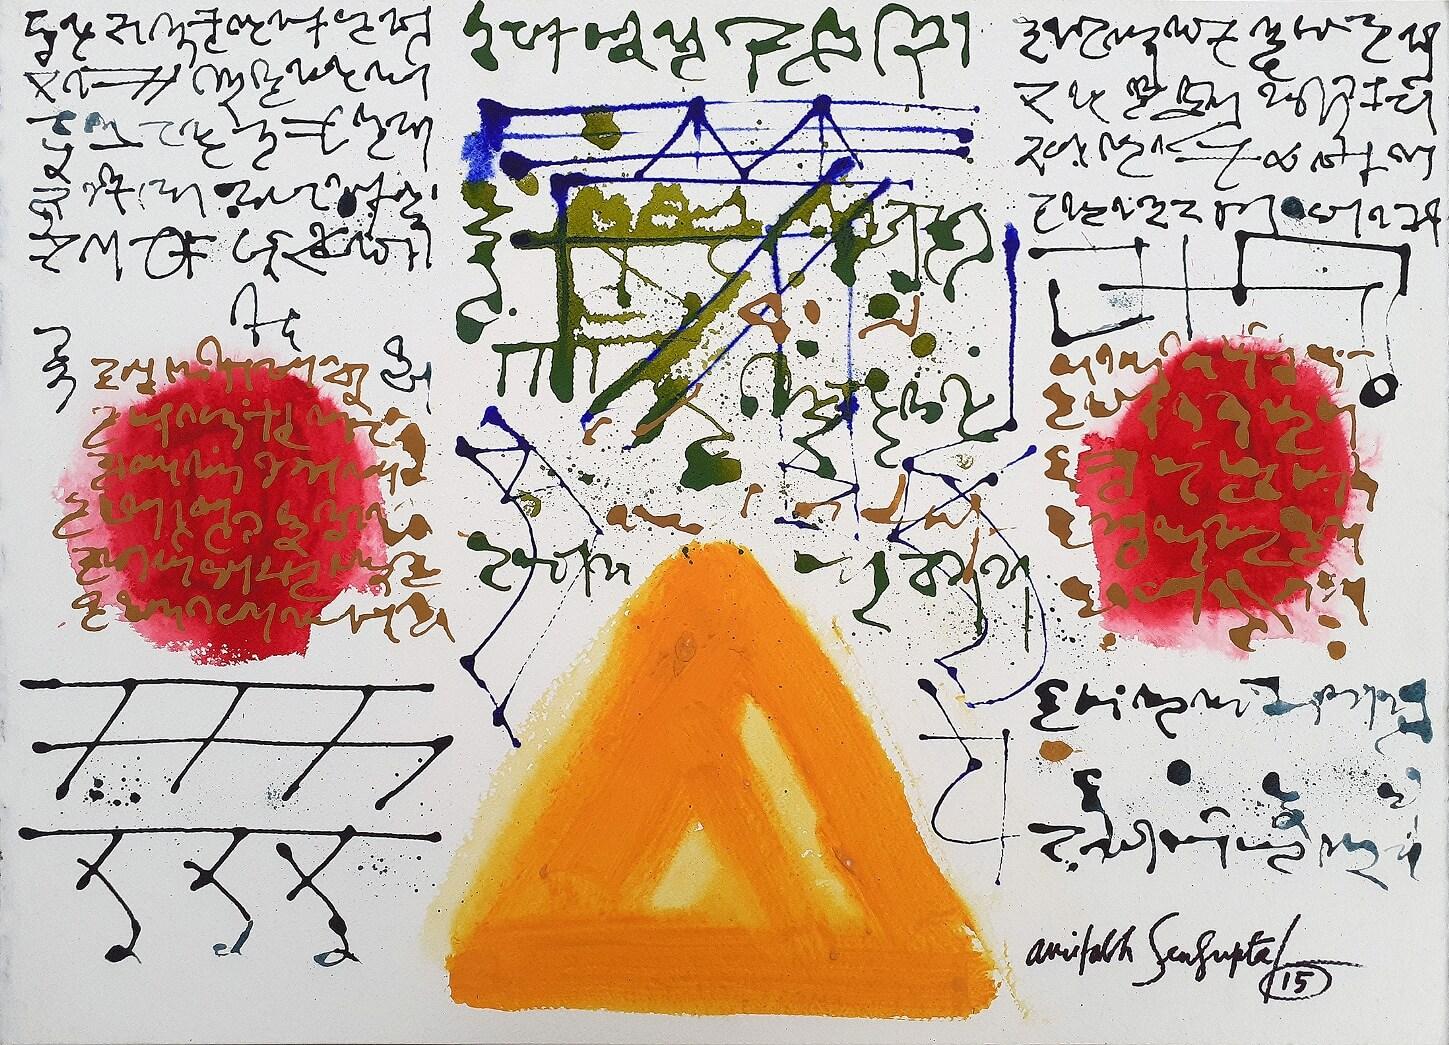 Amitabh Sengupta Abstract Painting - Inscription Series Mixed Media on Board, Black Yellow Orange “In Stock”